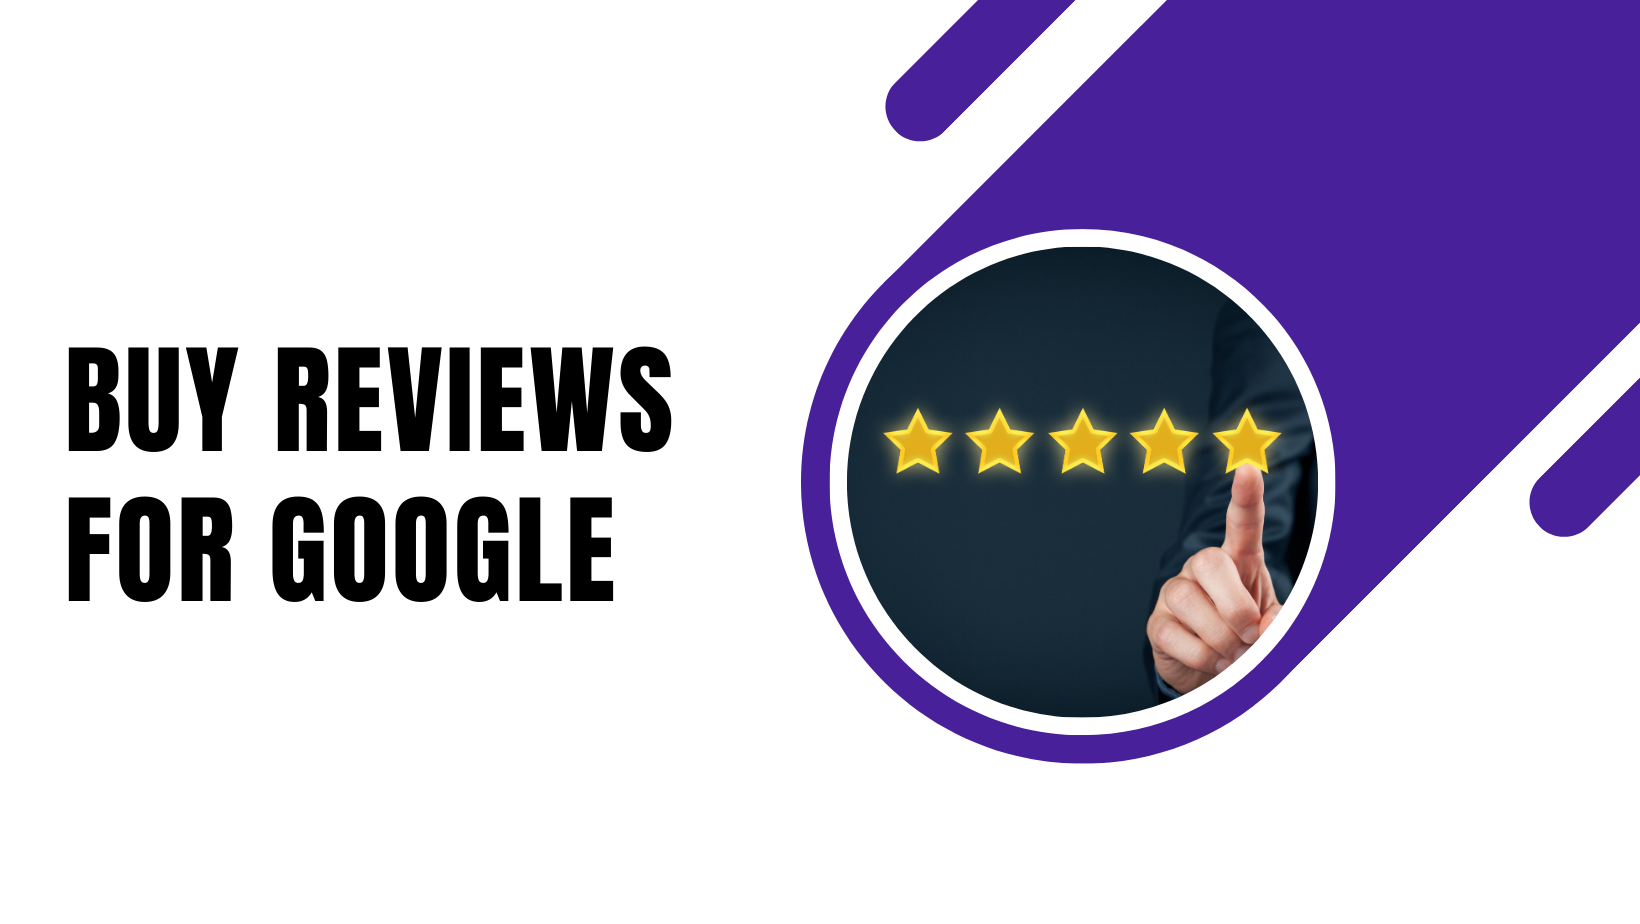 Buy Reviews for Google